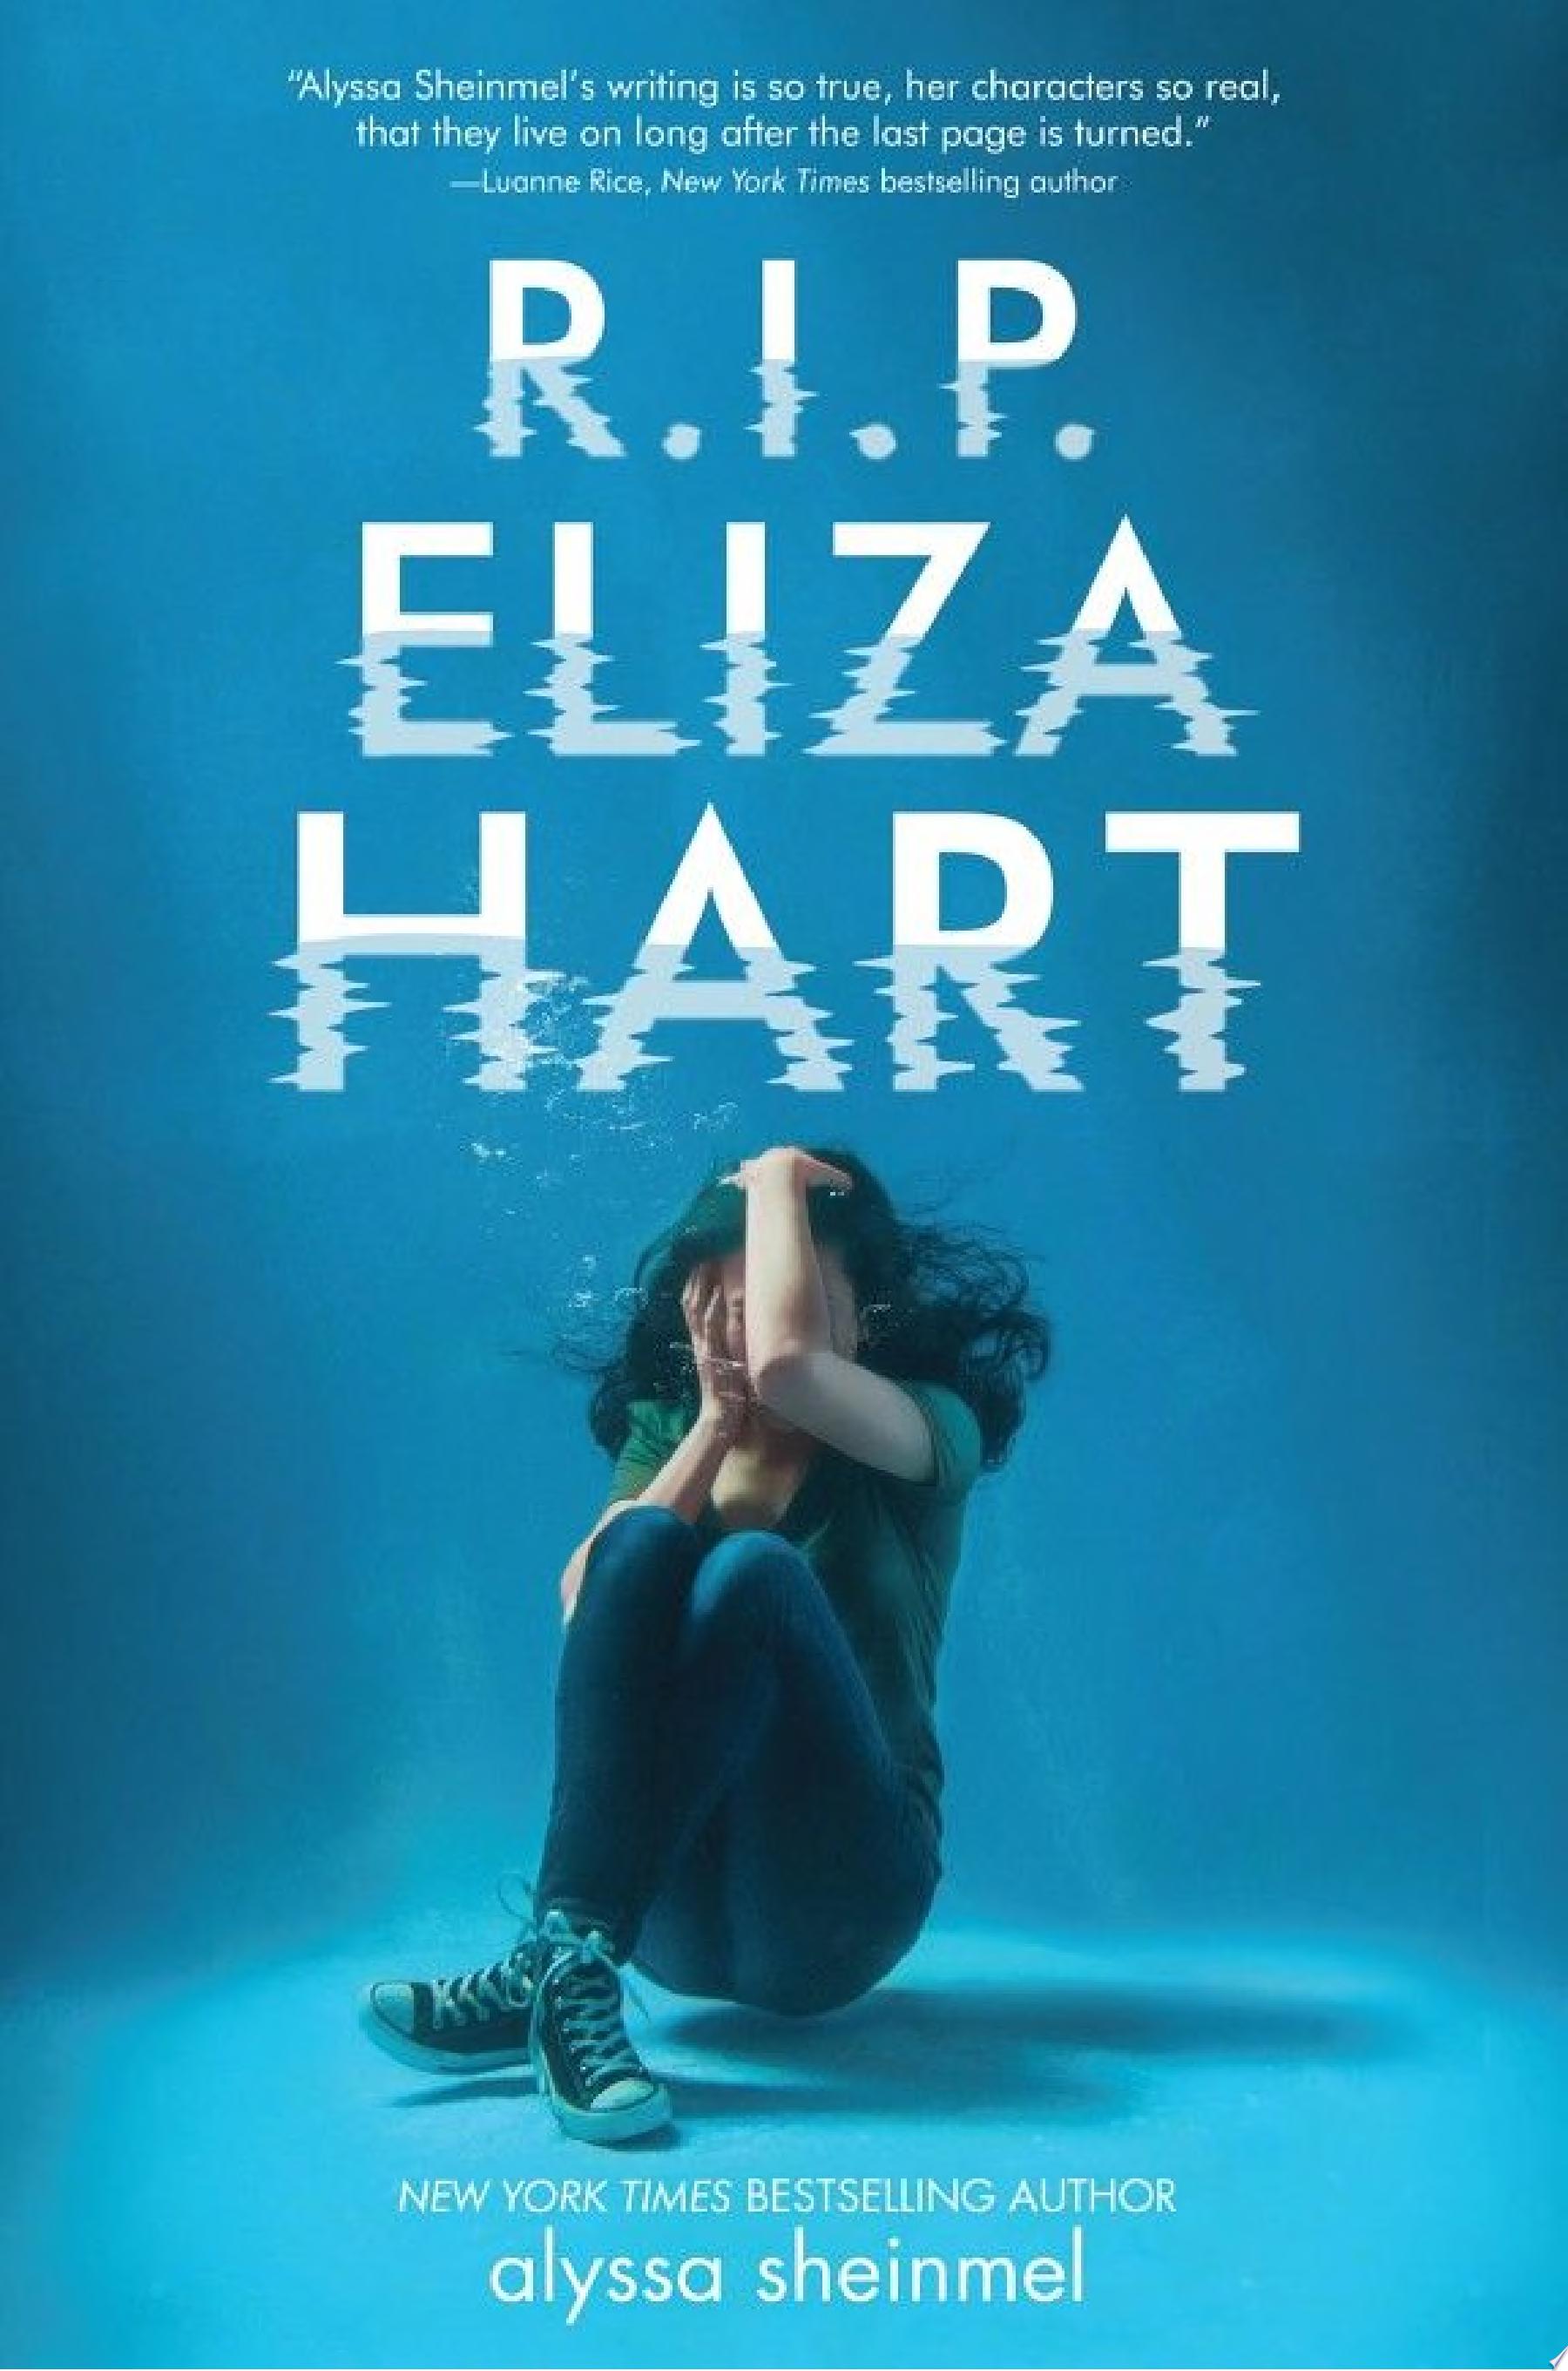 Image for "R.I.P. Eliza Hart"